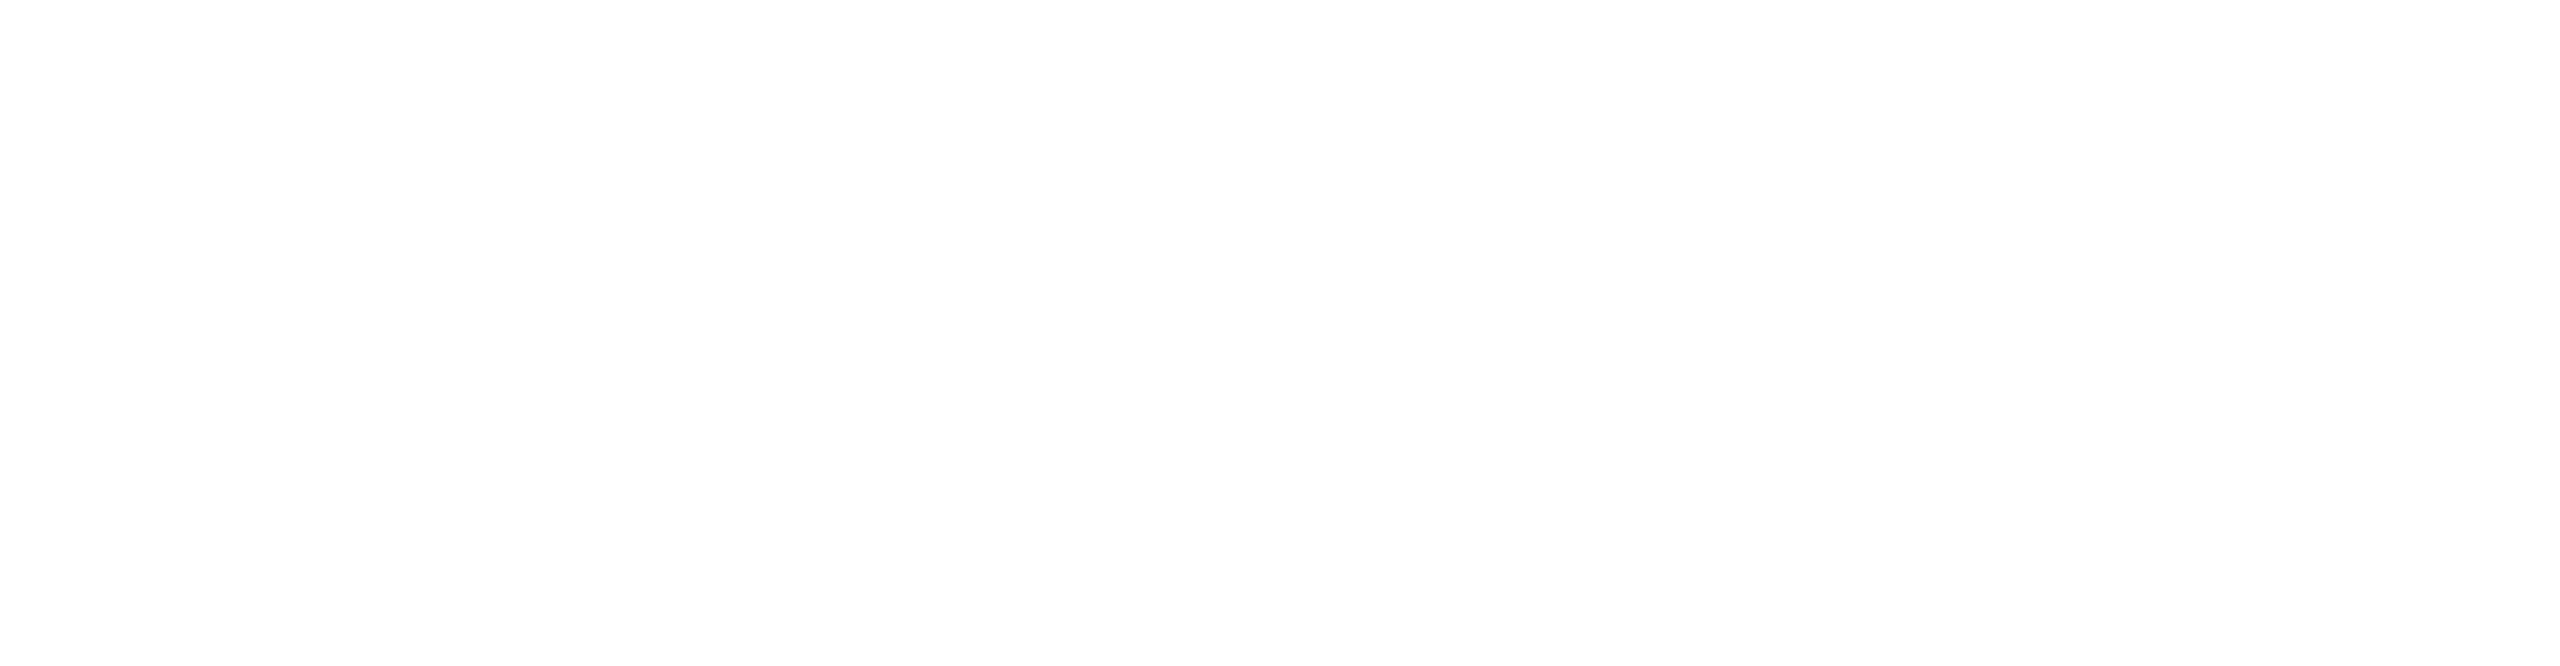 Bill Beazley Homes Logo White